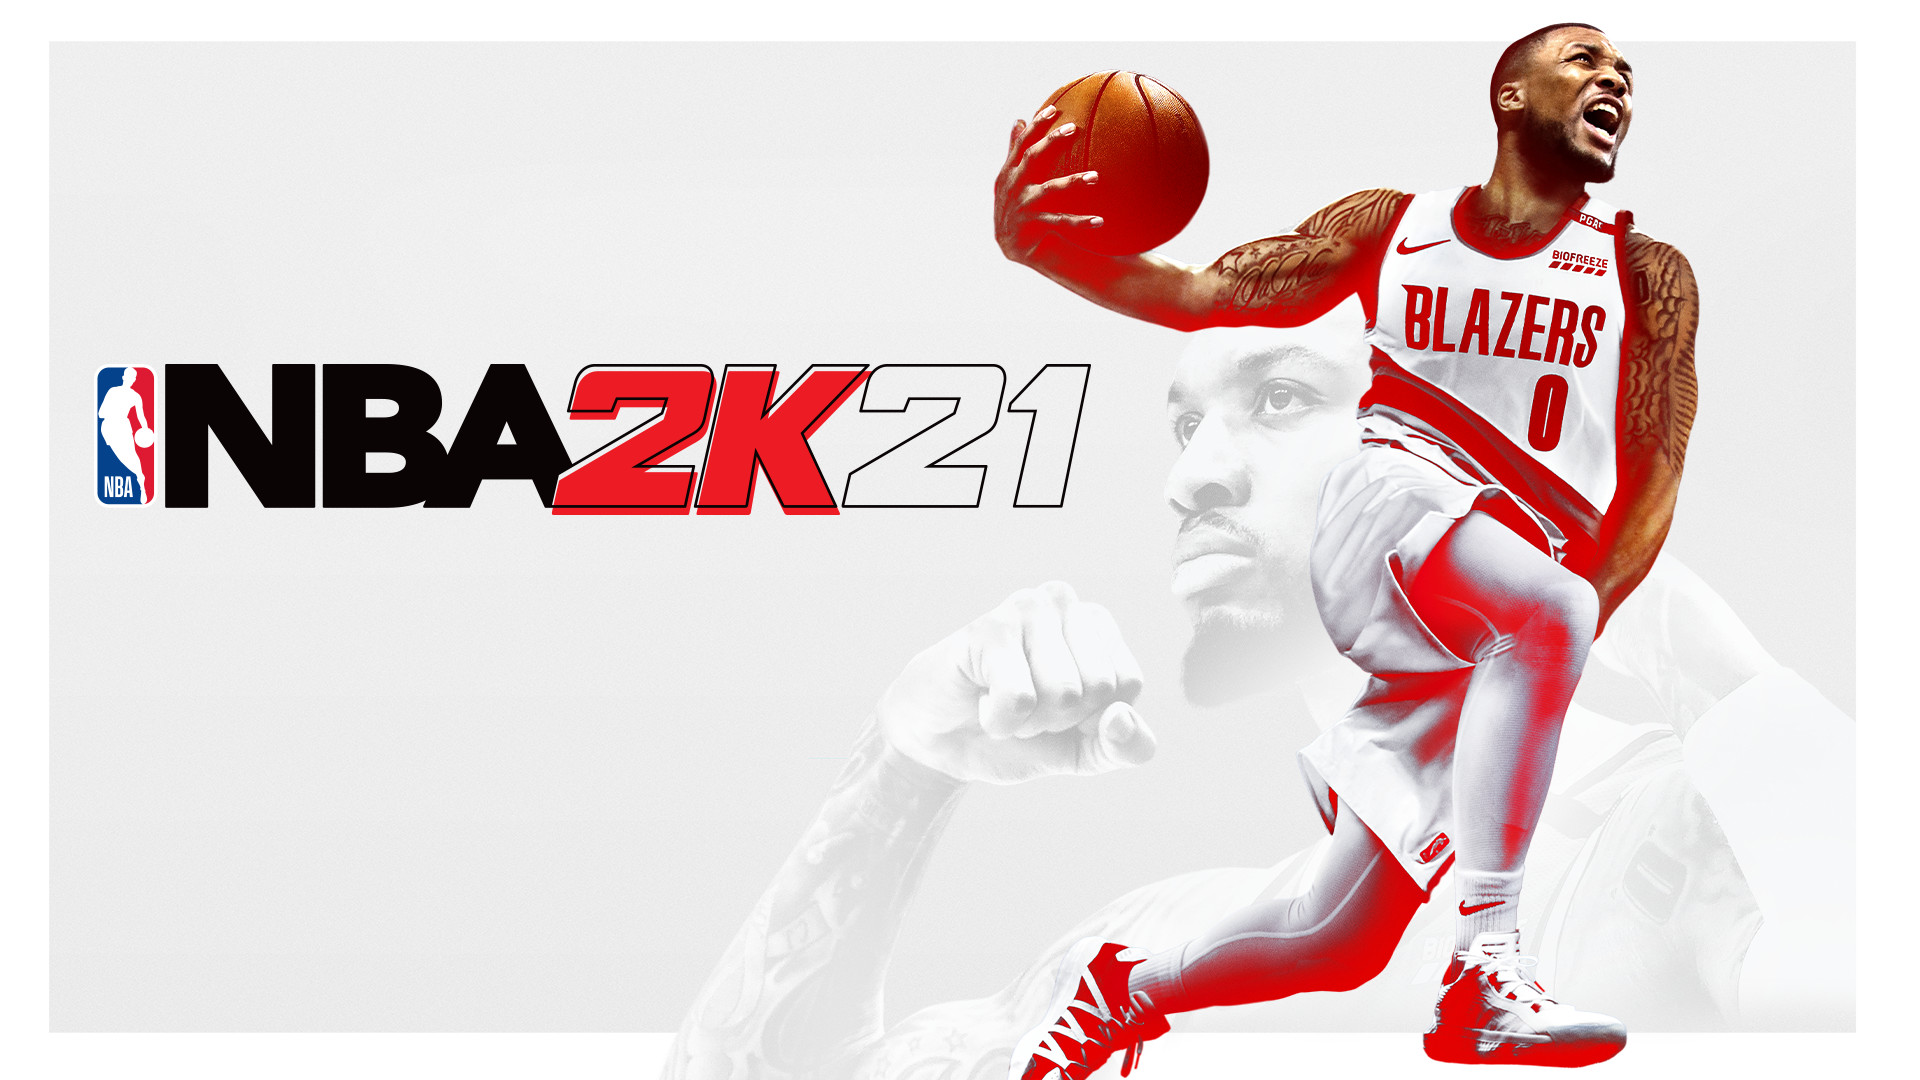 Nba 2k21 Steam预购开启标准版售价199元 赚钱计划公式游戏资讯